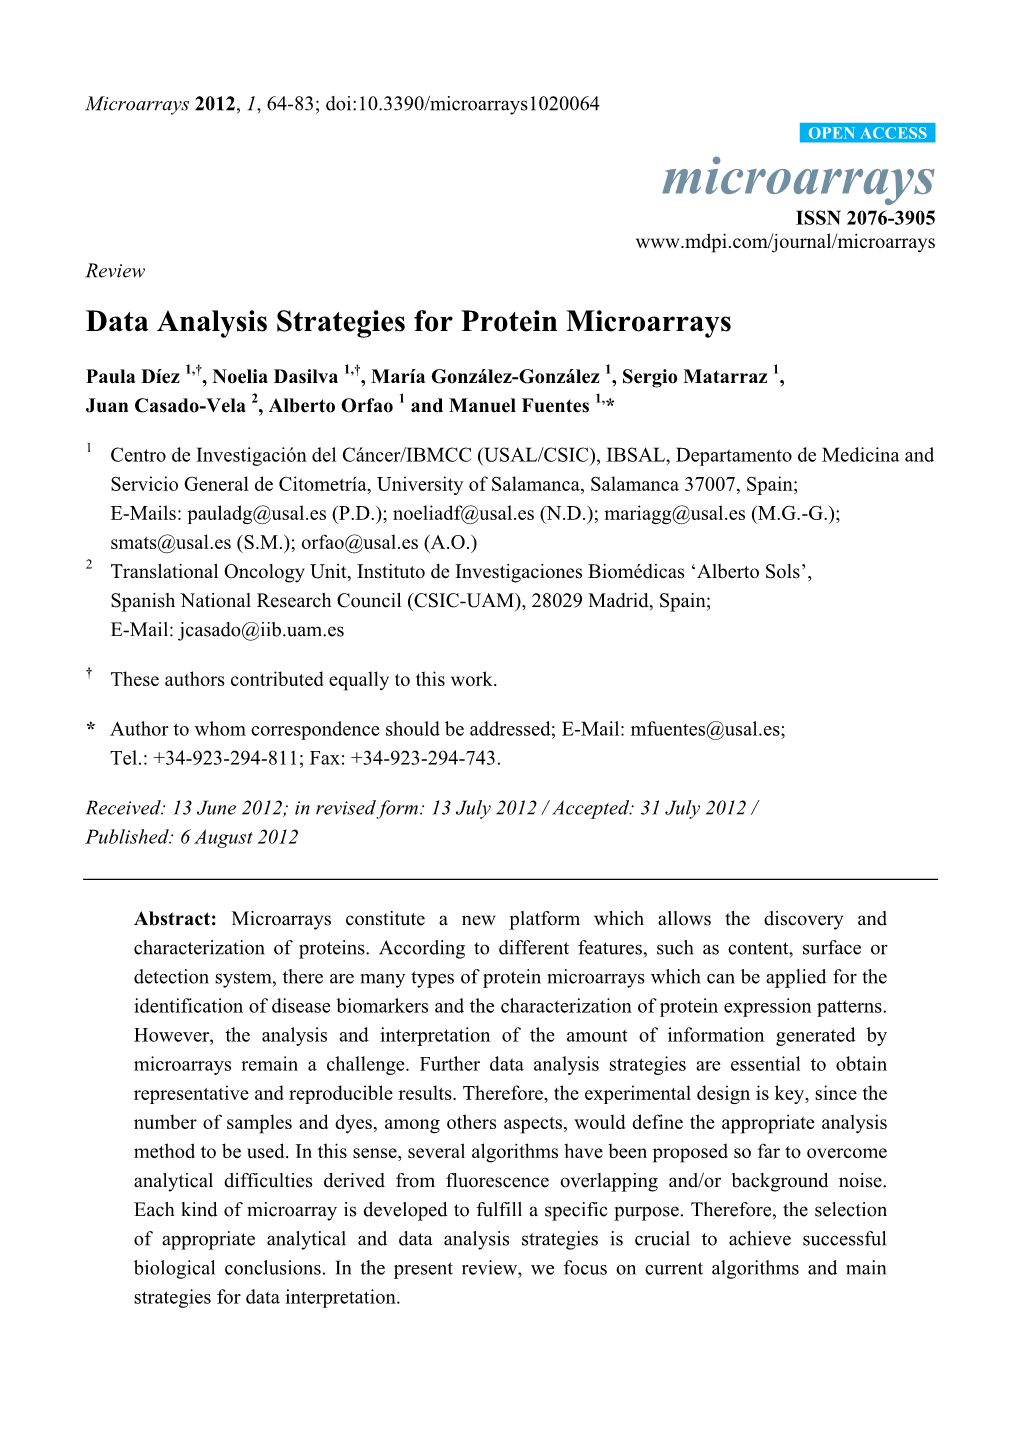 Data Analysis Strategies for Protein Microarrays